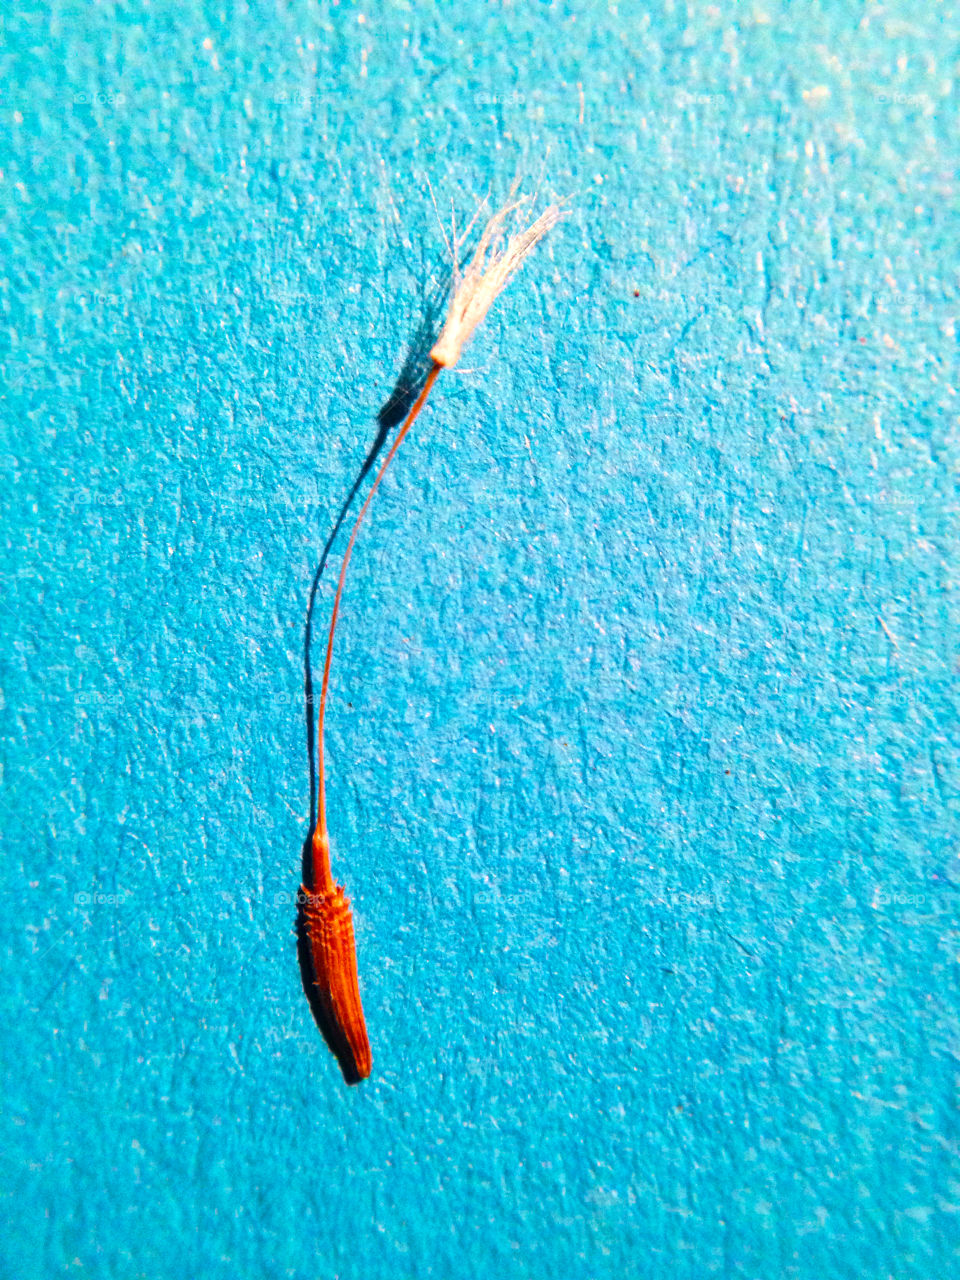 Dandelion seed on blue background